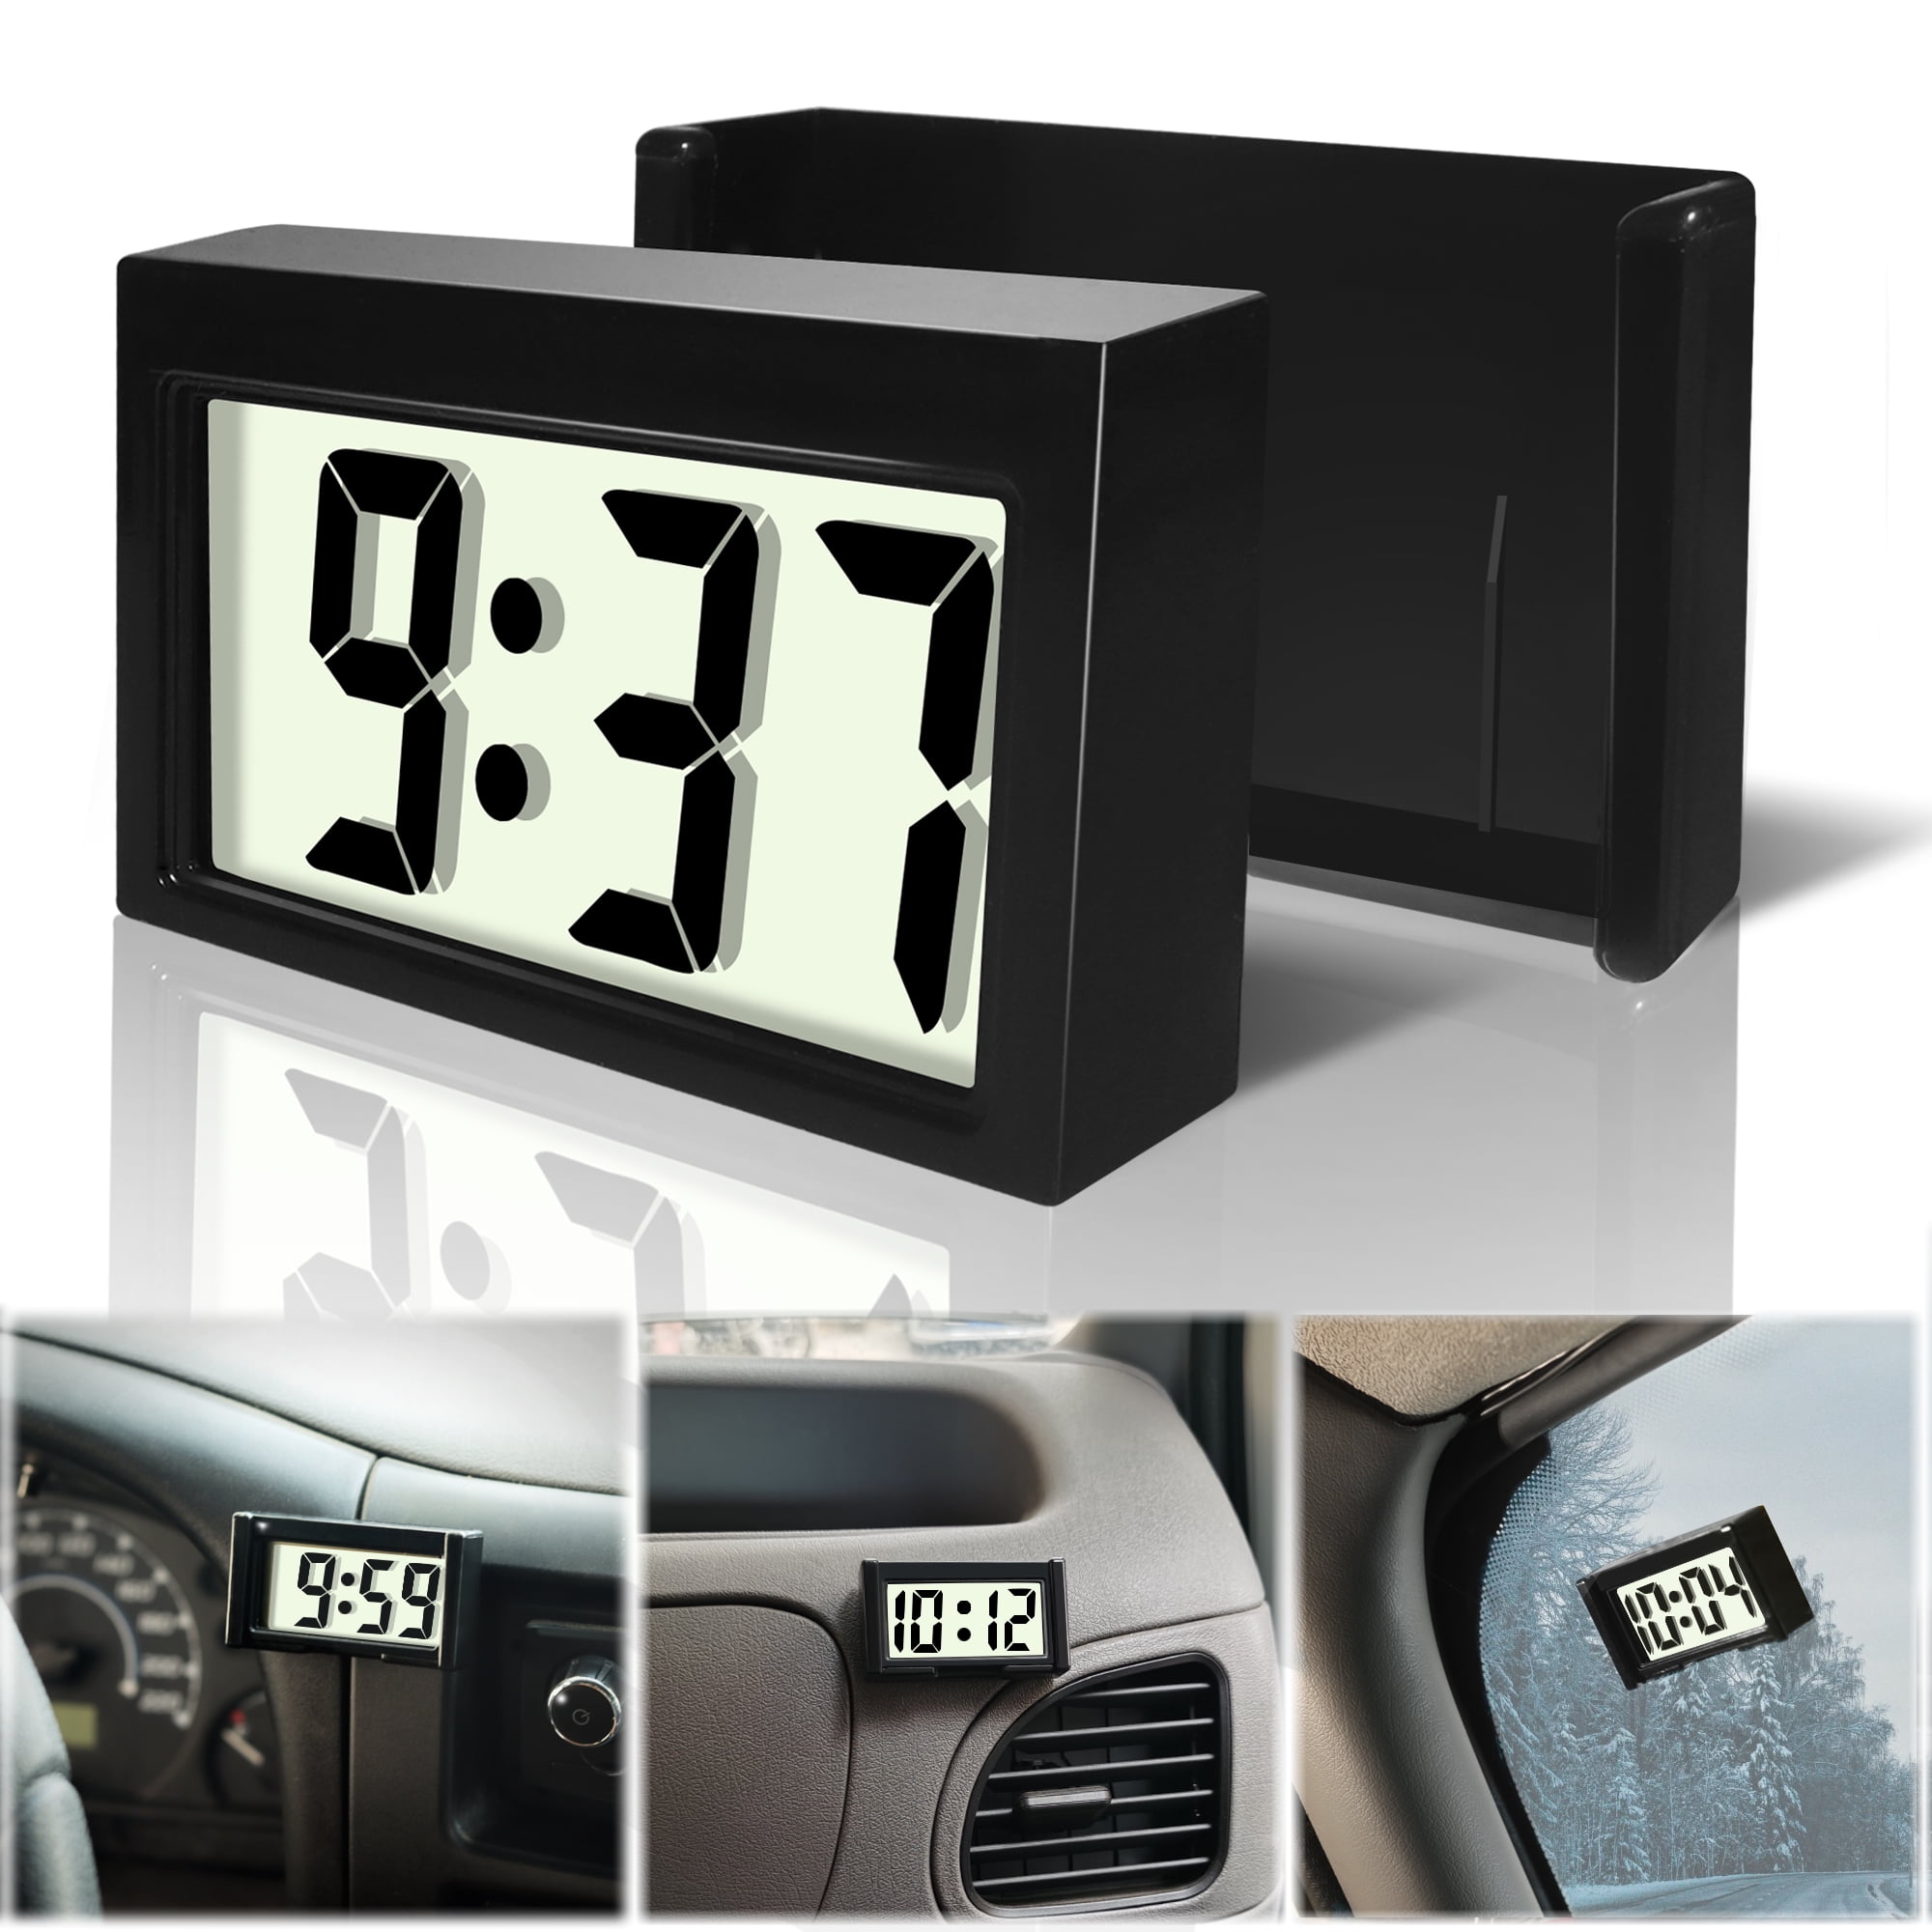 Black Car Dashboard Digital LCD Blue Backlight Thermometer Time Clock Calendar 